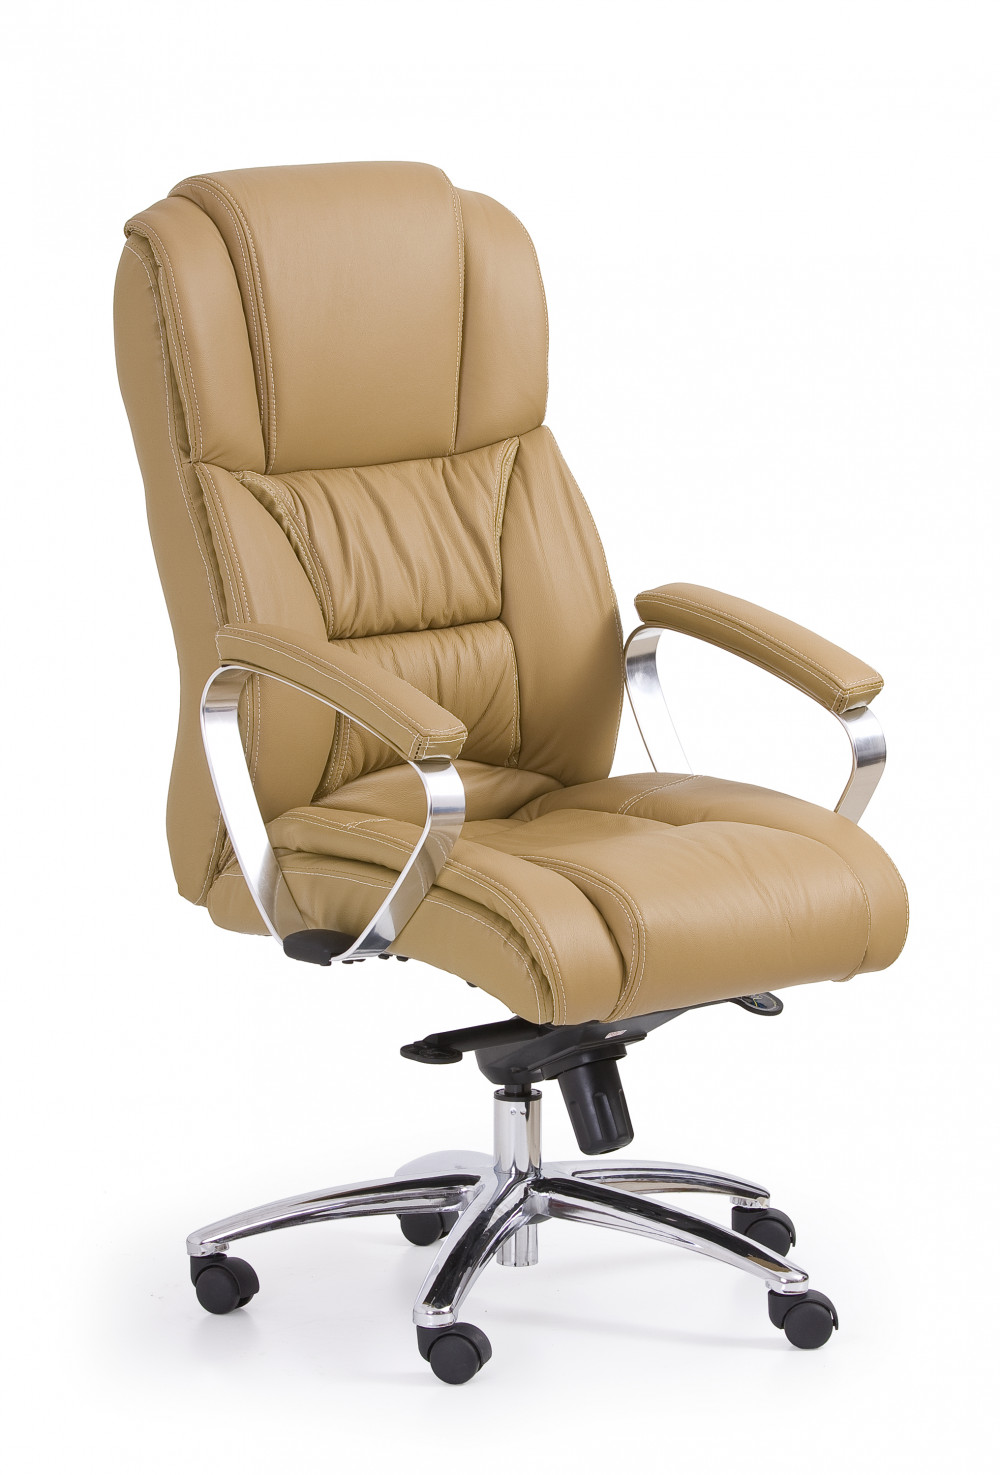 FO89 világosbarna bőr irodai szék